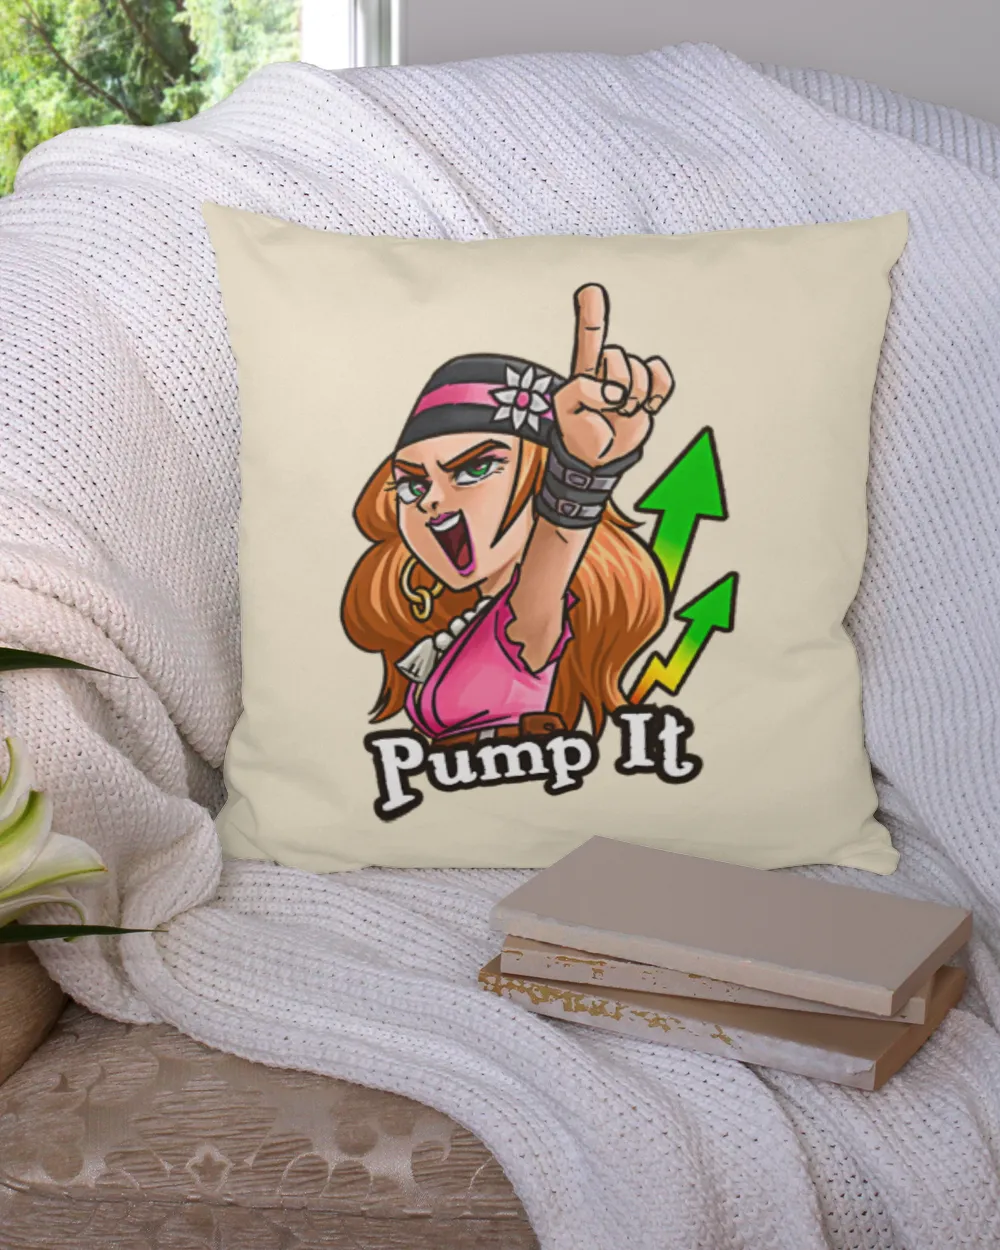 Pump it -  bitcoin style - pillow crypto